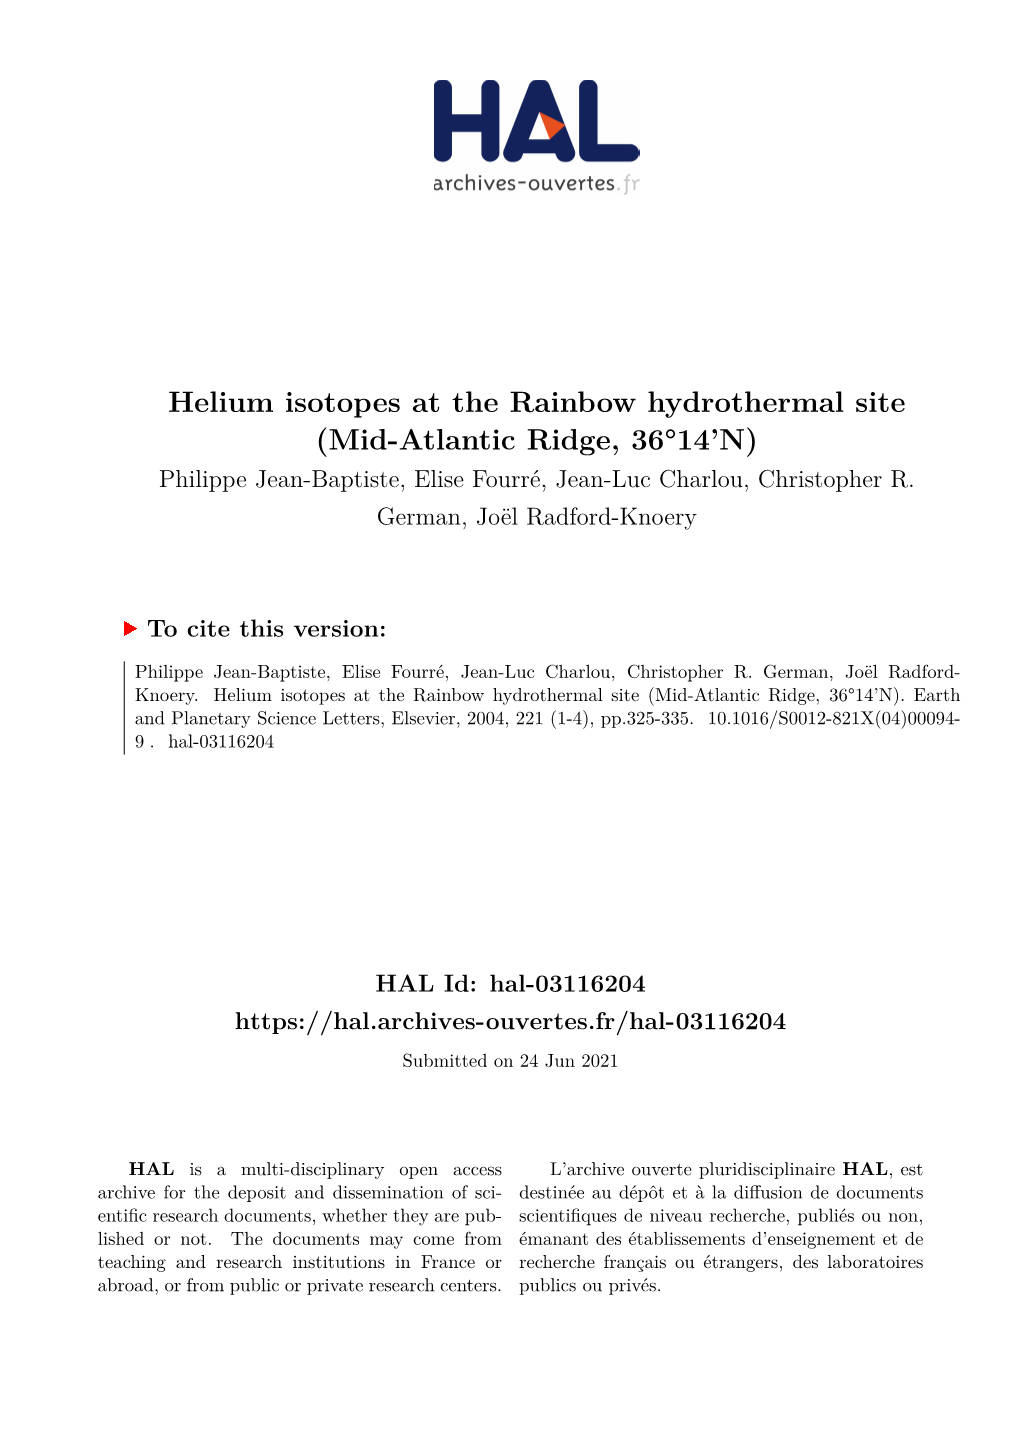 Helium Isotopes at the Rainbow Hydrothermal Site (Mid-Atlantic Ridge, 36°14'N)